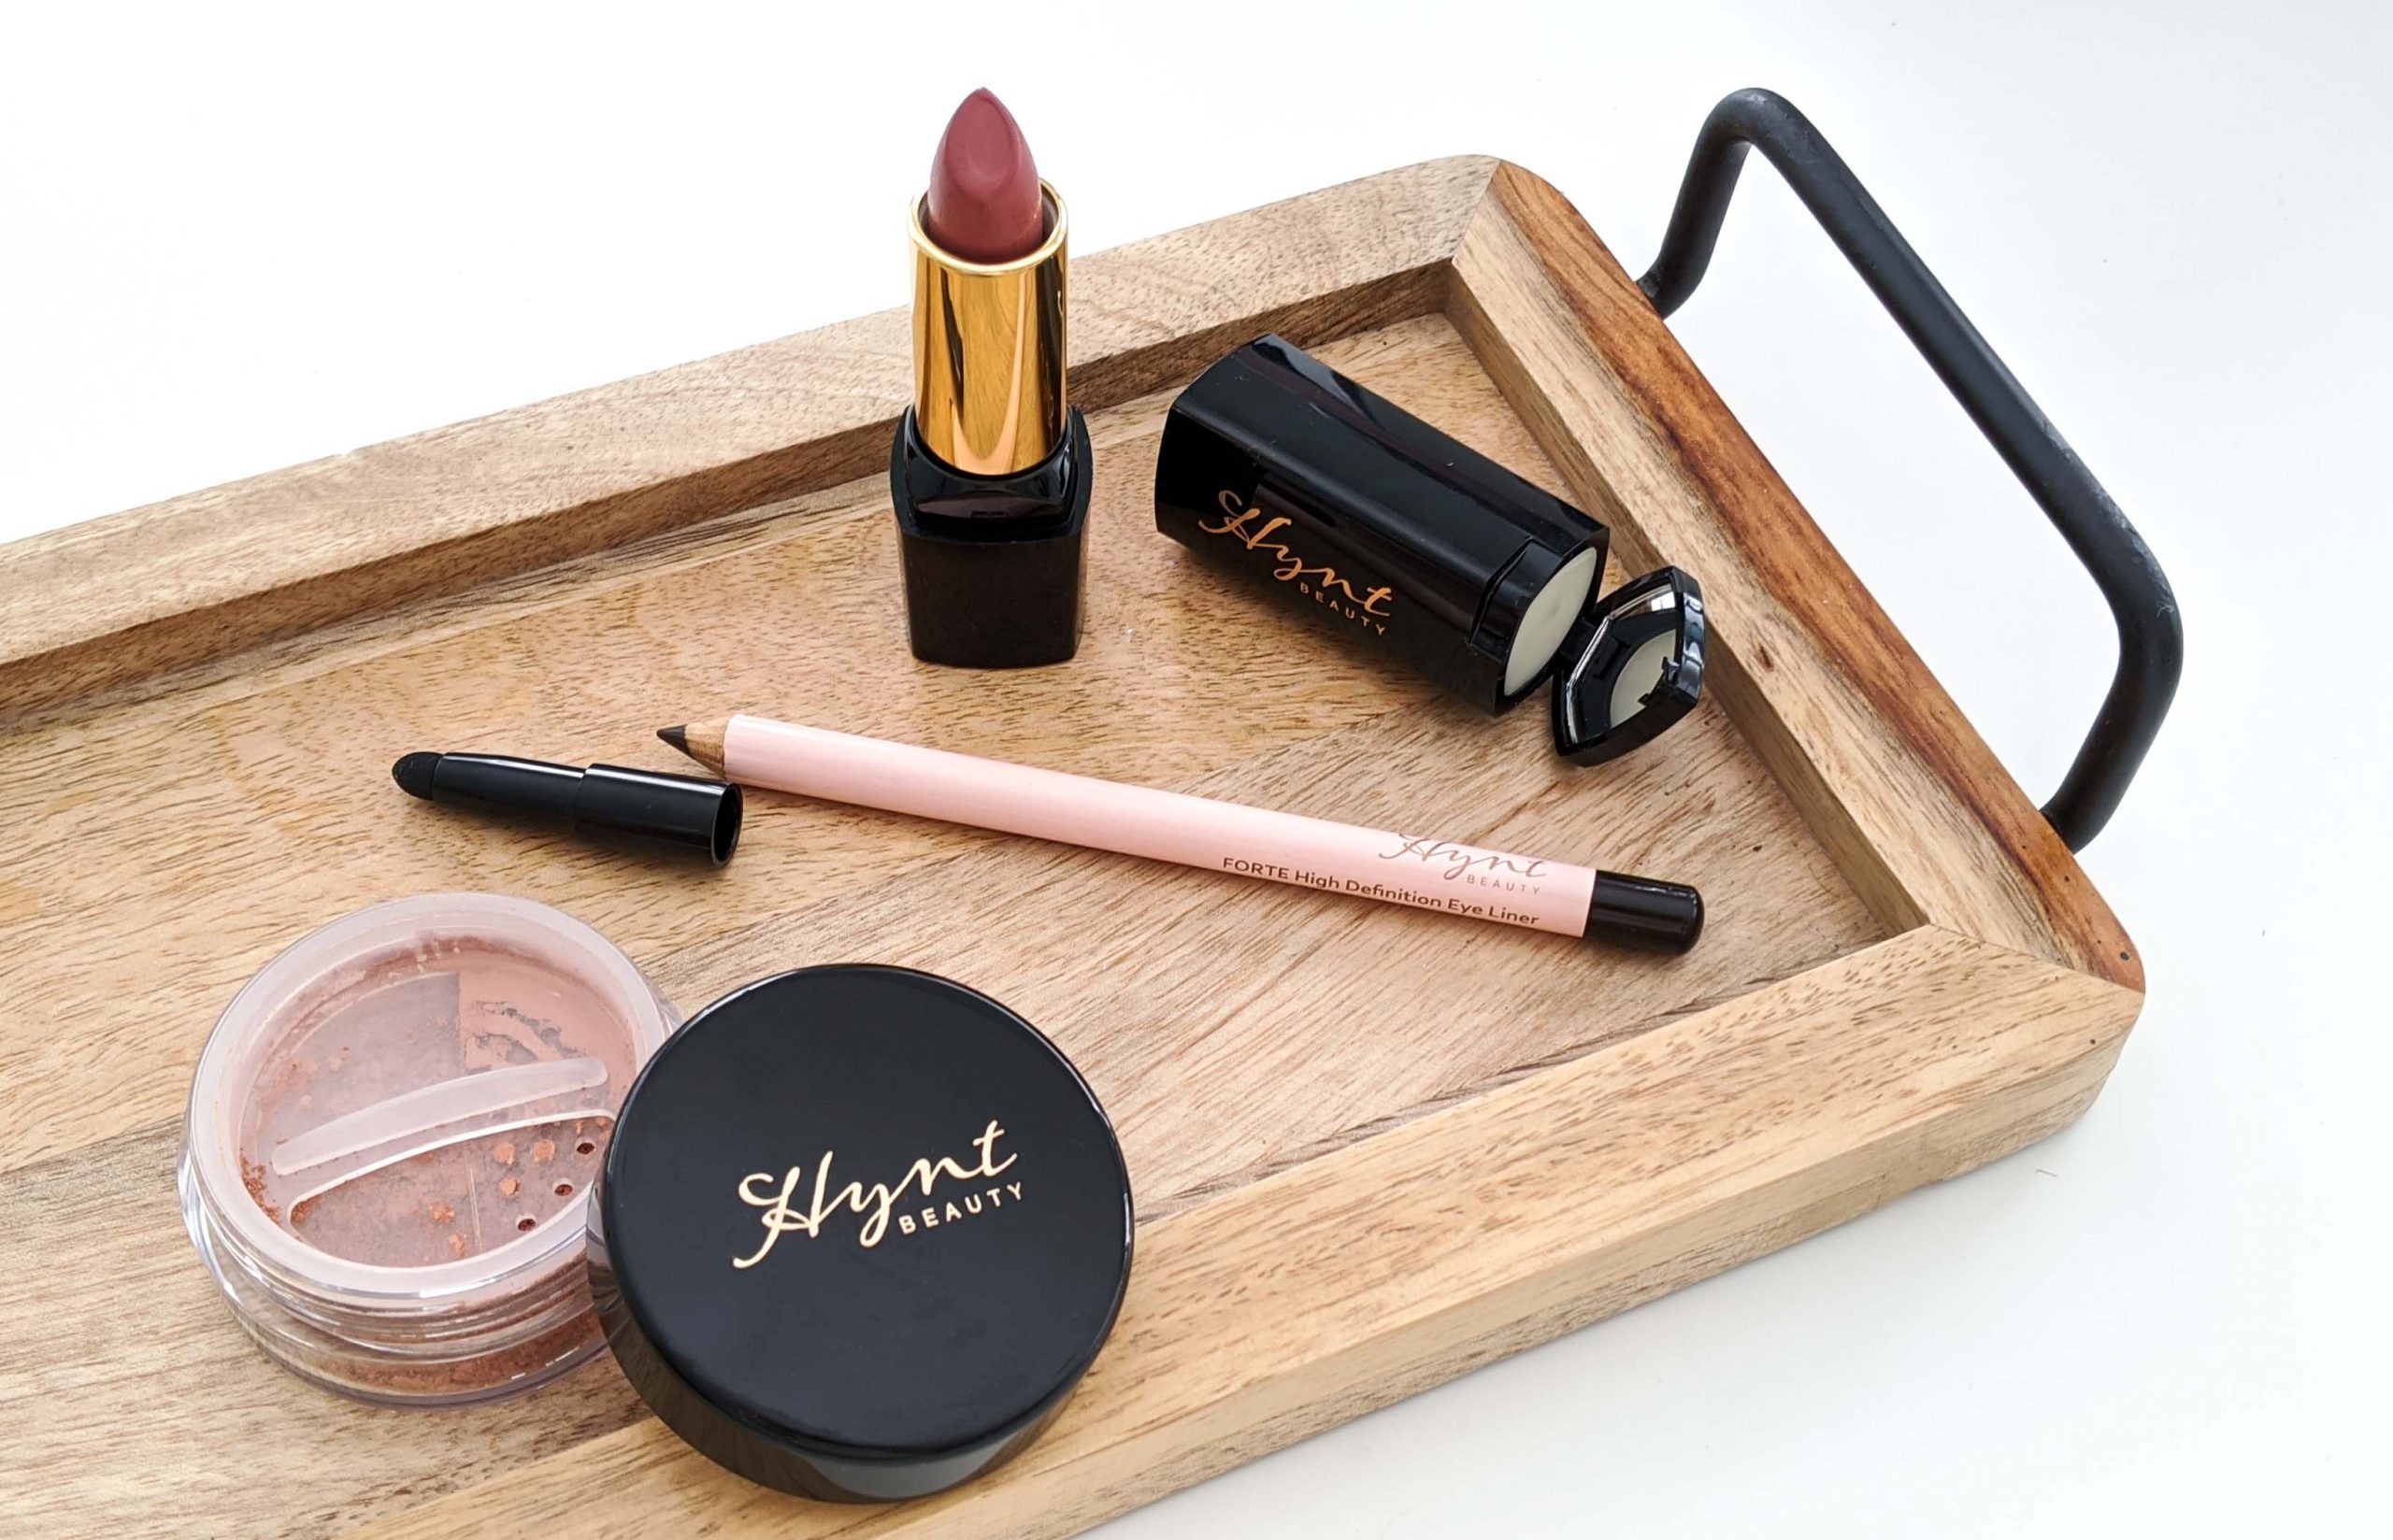 Hynt Beauty products - Plein Vanity